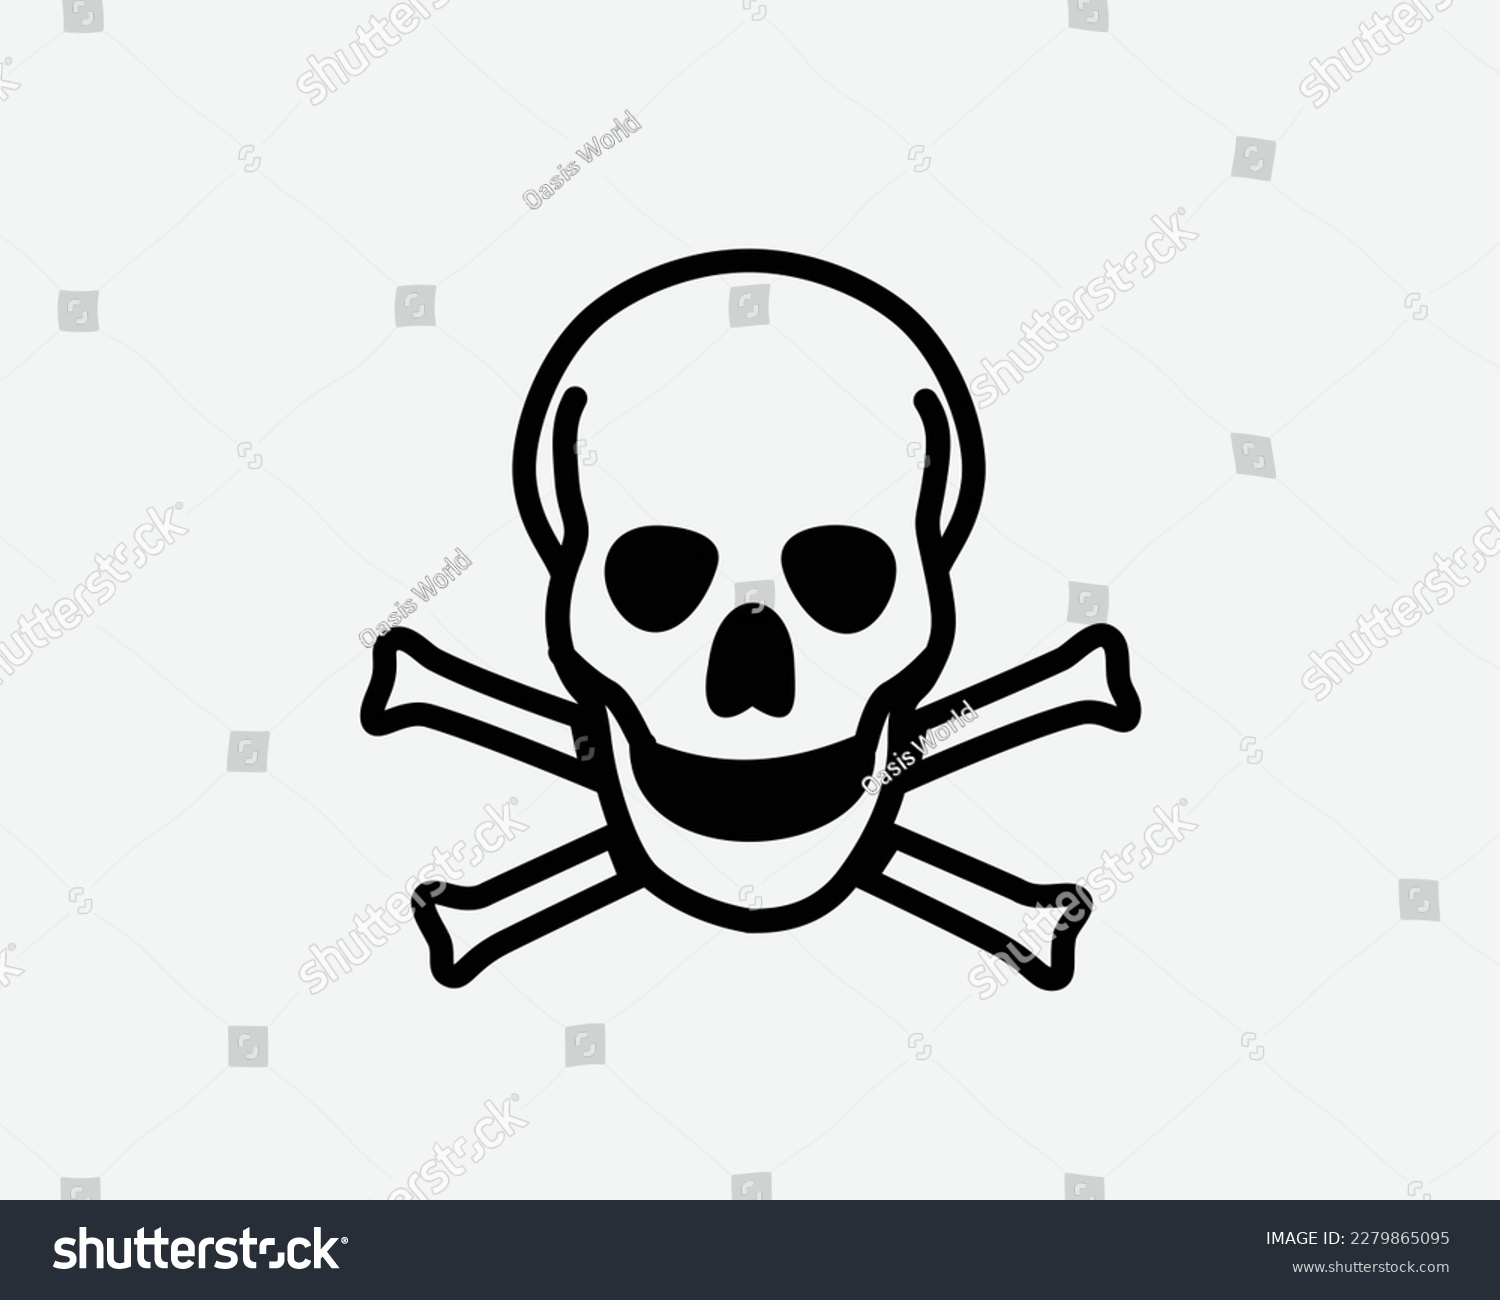 SVG of Skull Icon Death Poison Danger Pirate Cross Bone Dead Warning Vector Black White Silhouette Symbol Sign Graphic Clipart Artwork Illustration Pictogram svg